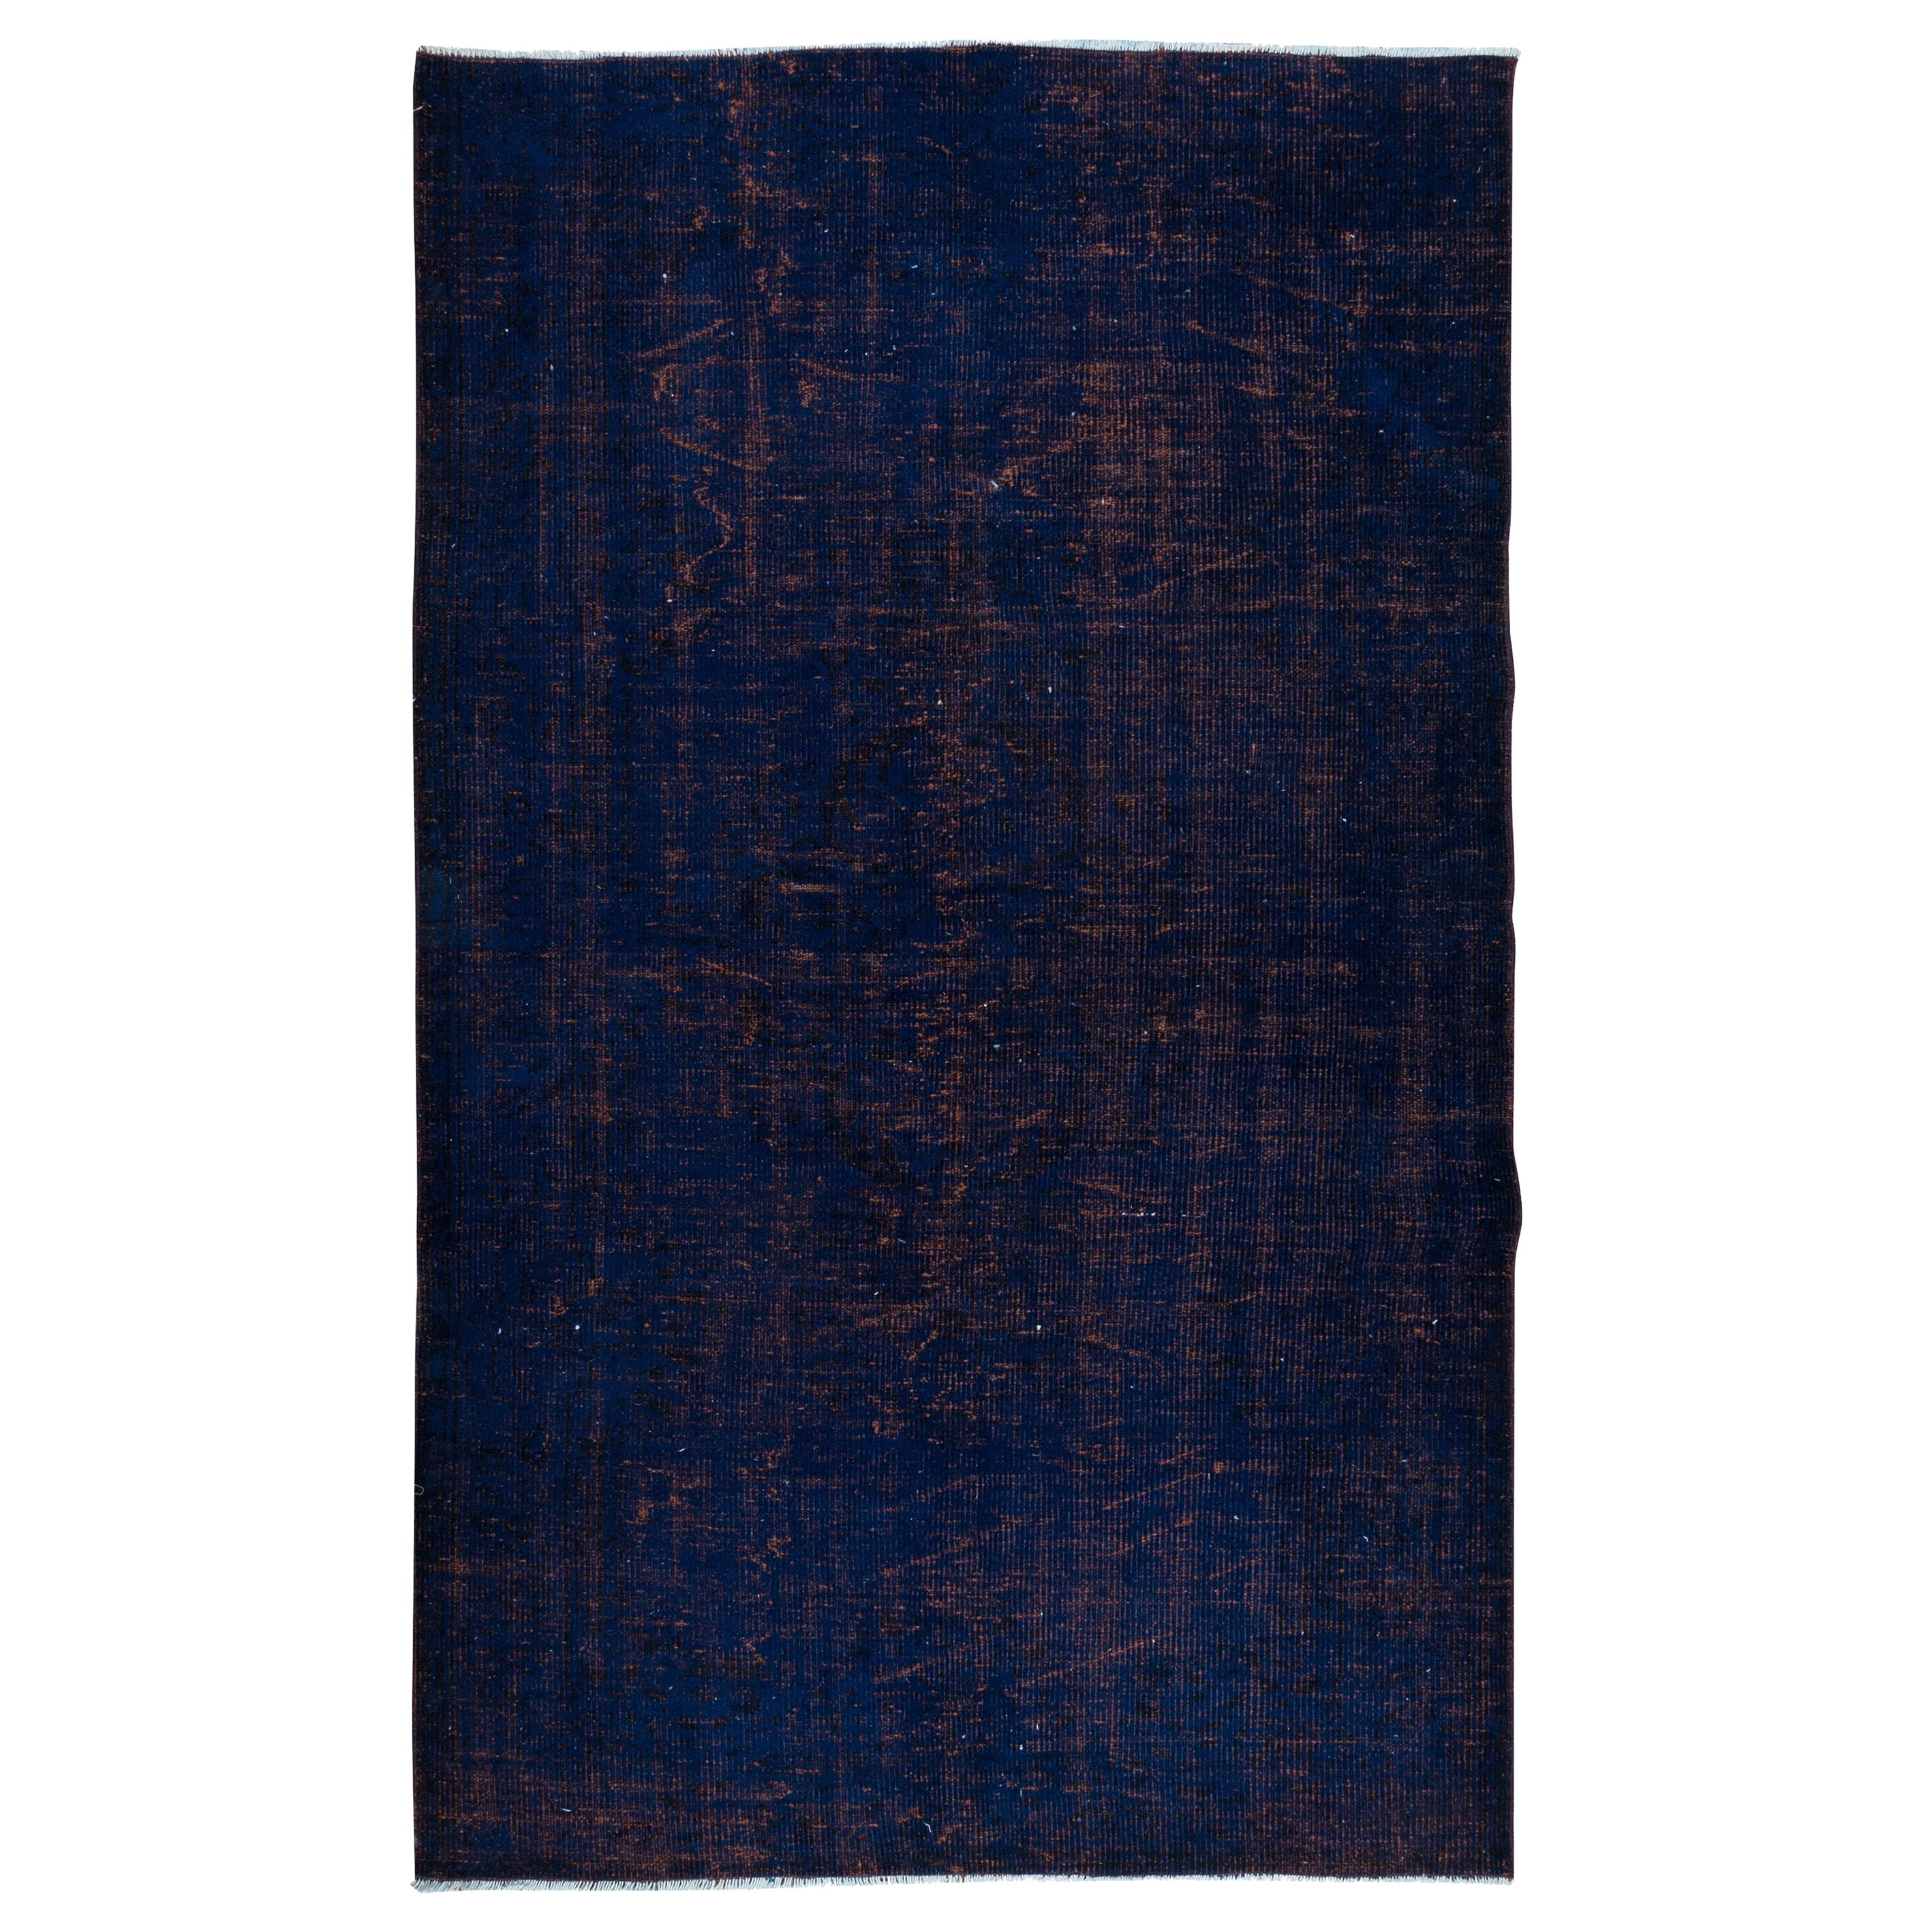 5.3x8.3 Ft Handmade Navy Blue Rug, Modern Turkish Carpet in Ultramarine Blue For Sale